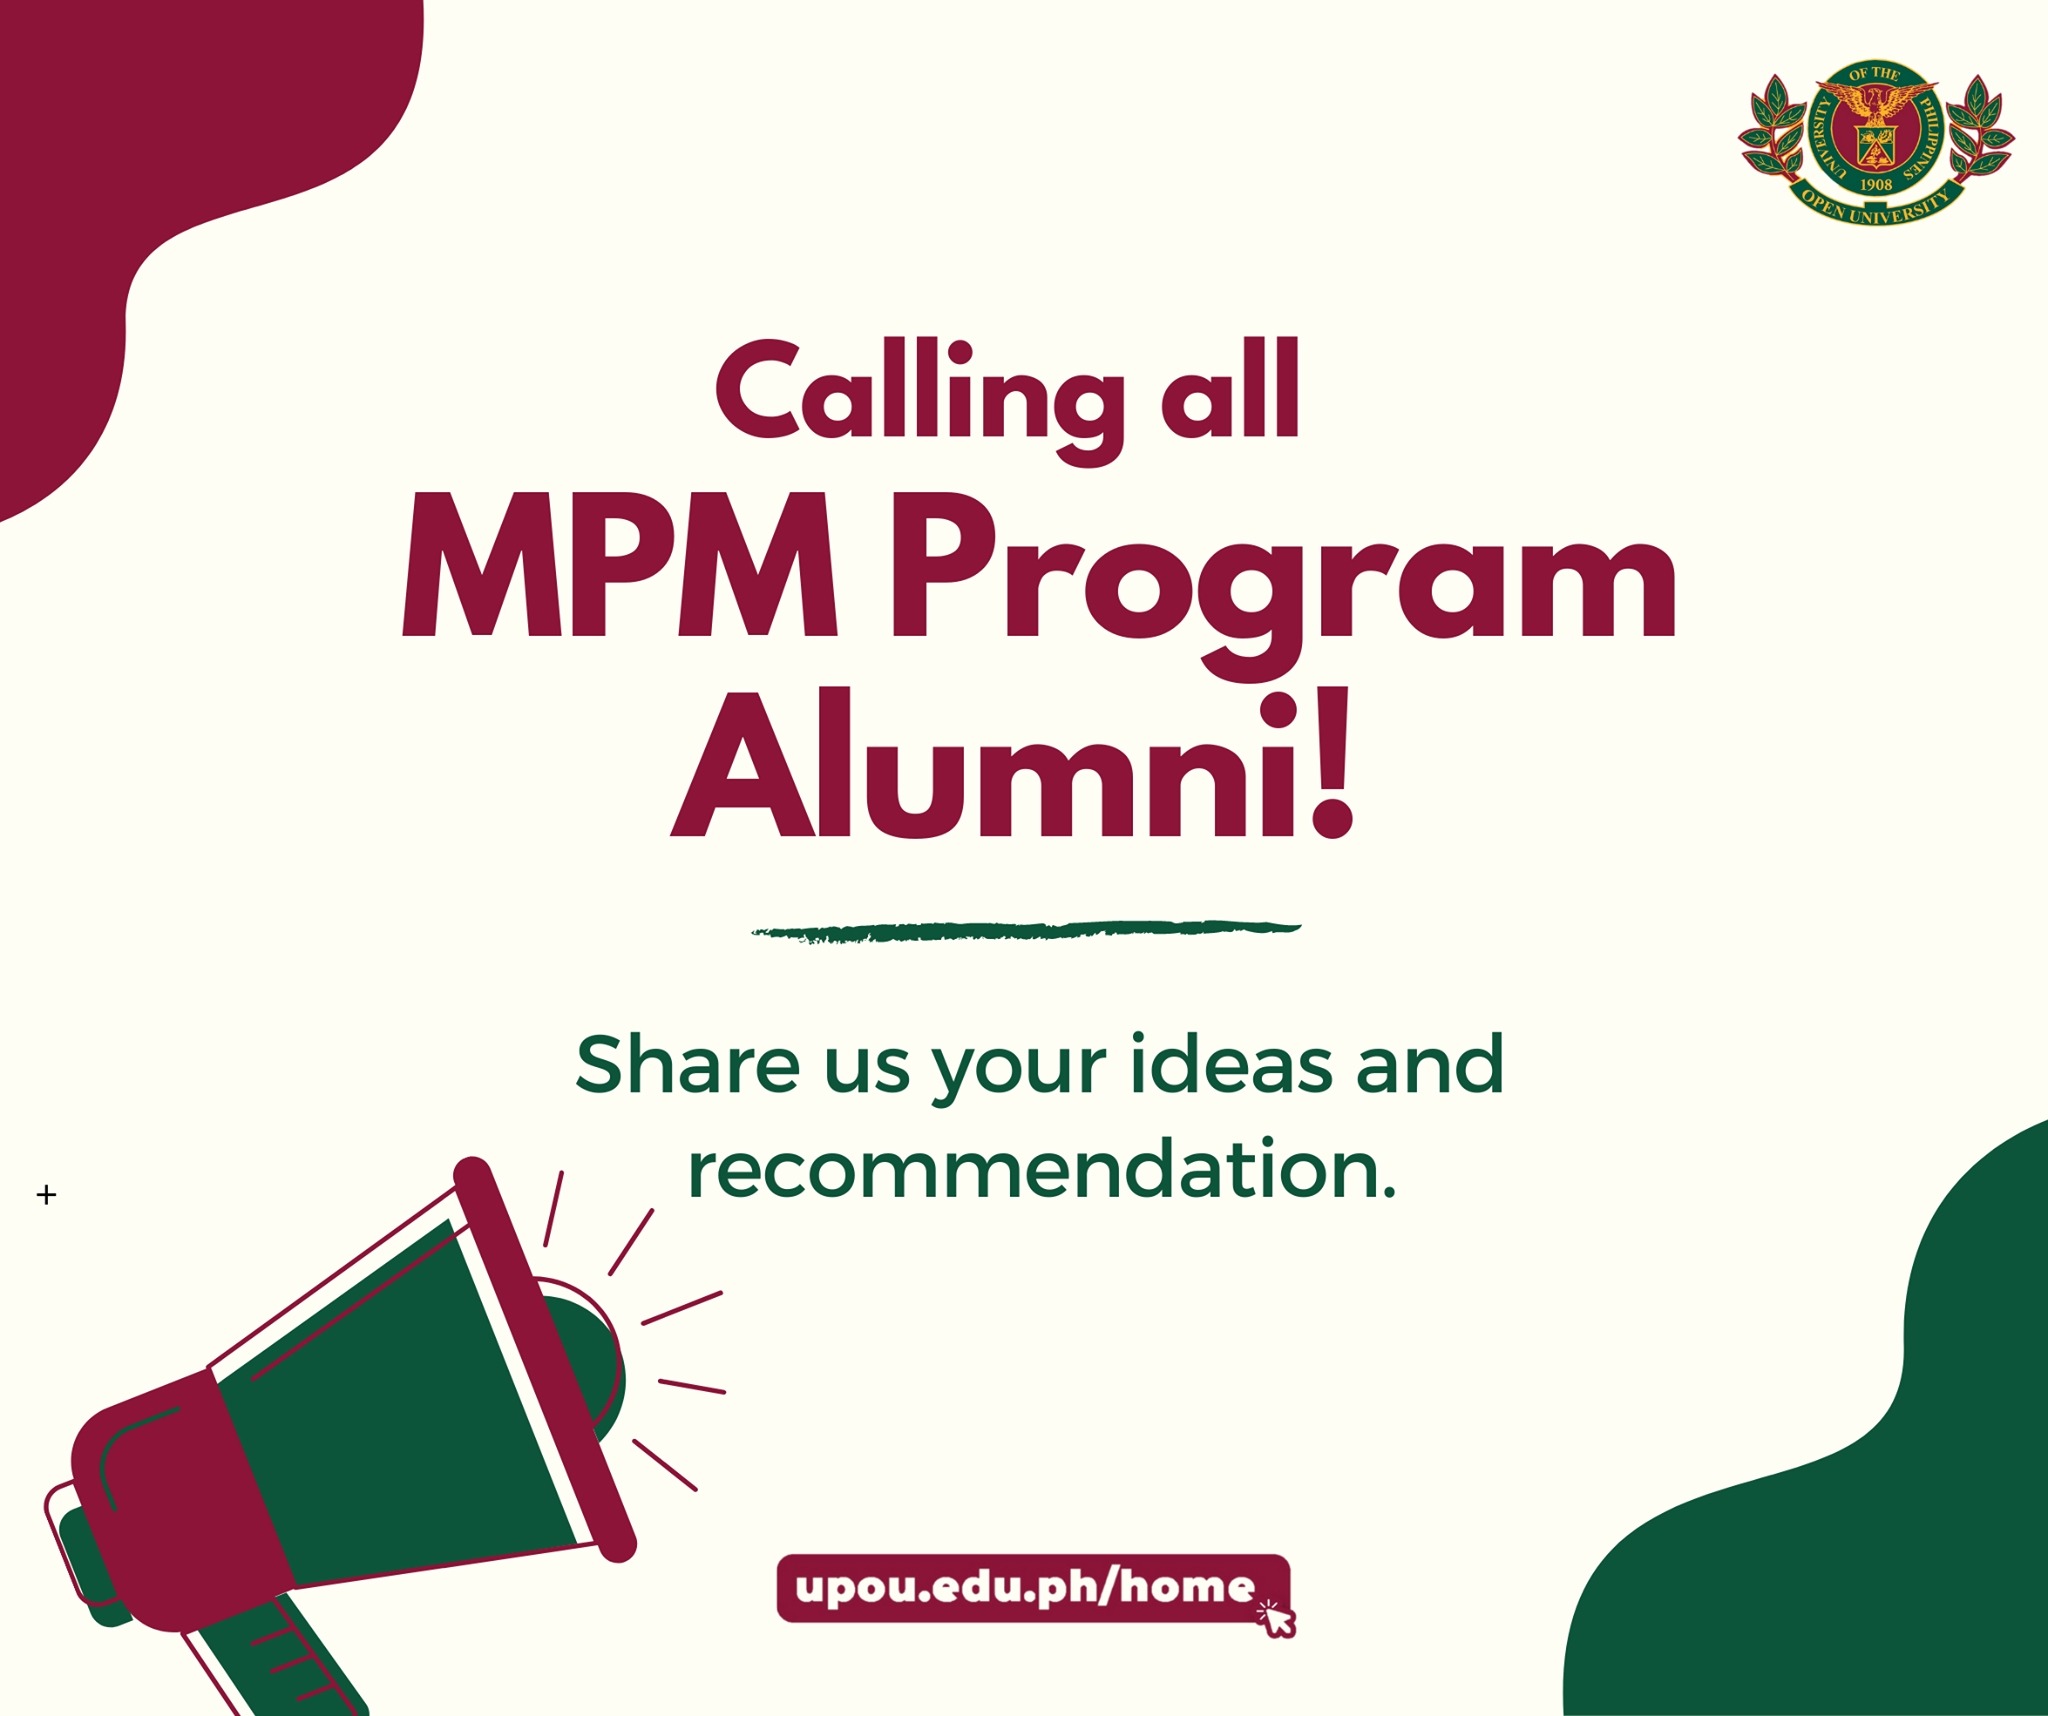 Calling all MPM Program alumni!